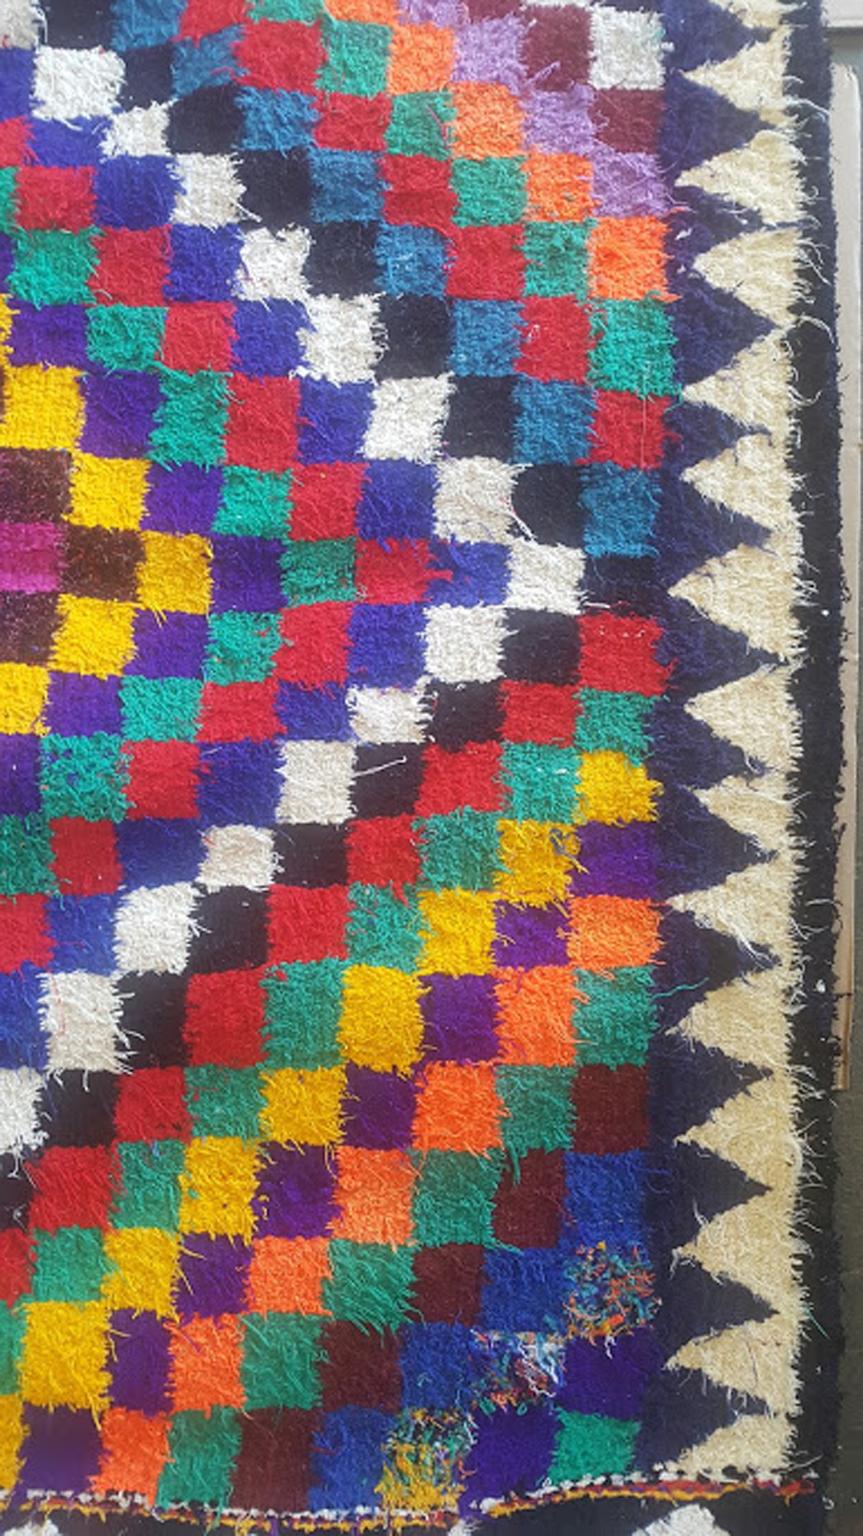 Hand-Knotted Big Colorful Vintage Carpet, Boho Style Rug, Similar to Kilim